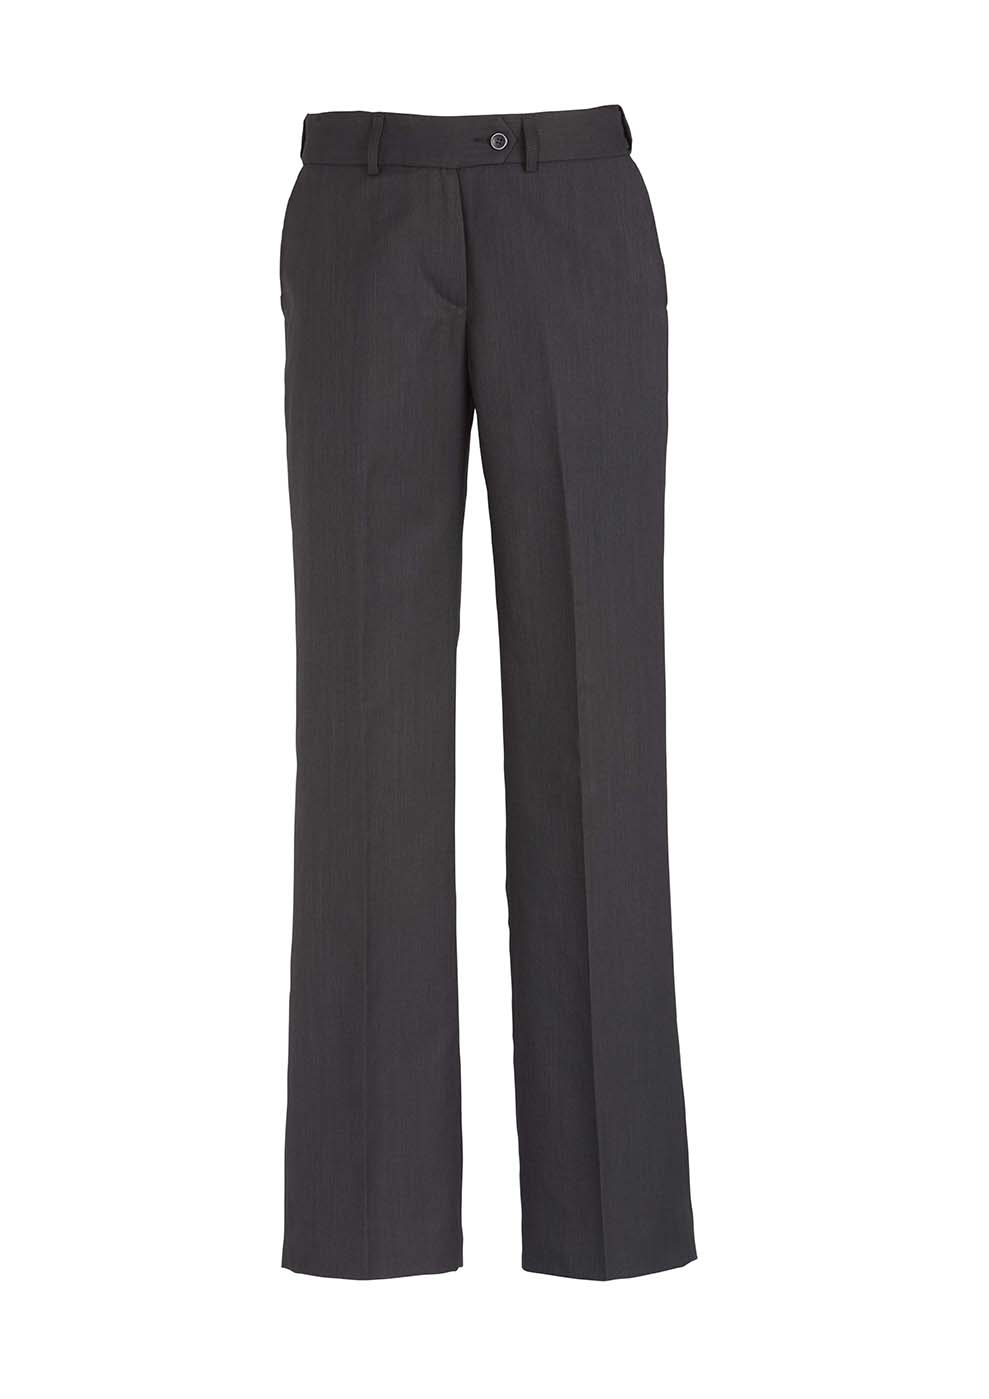 Ladies Adjustable Waist Pants. 92% Polyester, 8% Bamboo - 10115 ...